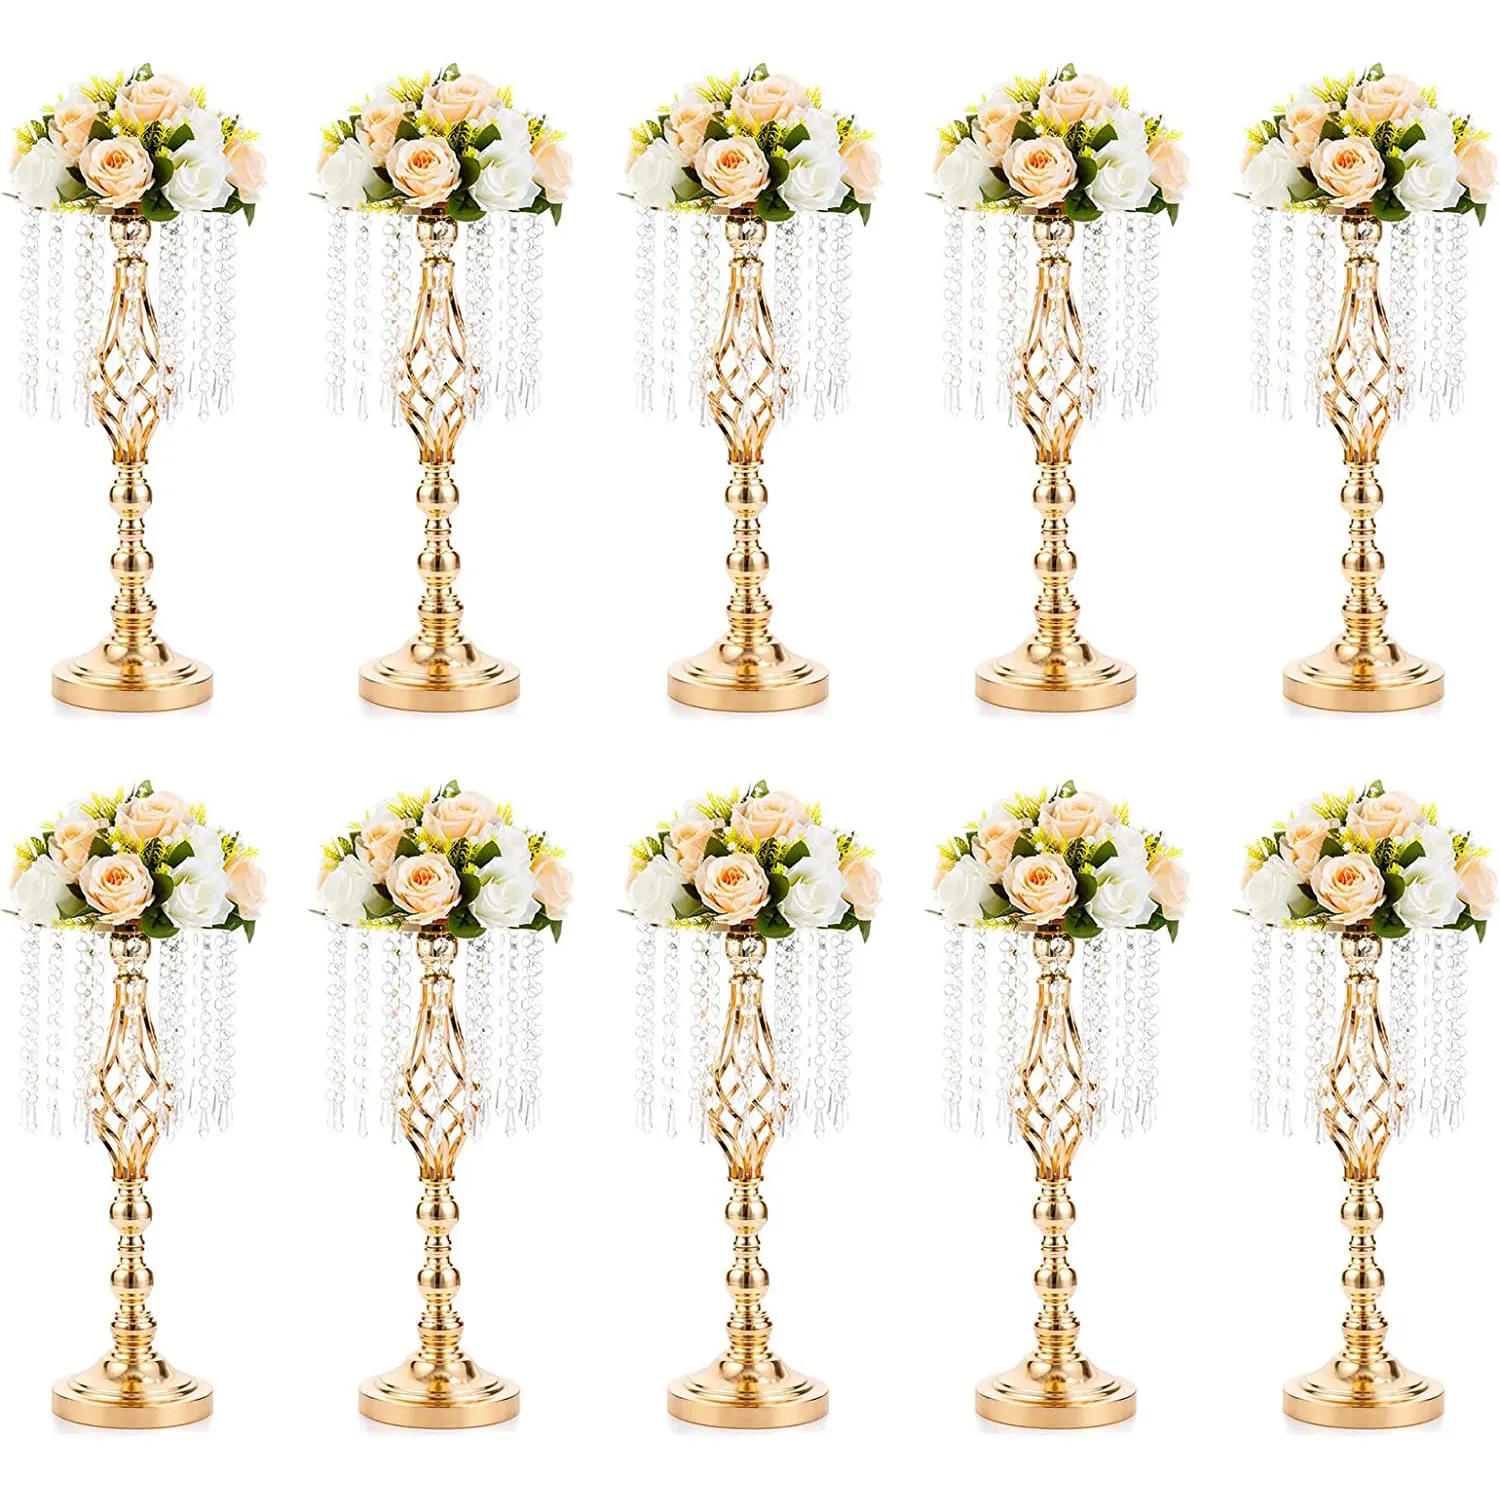 Nicro סידורי שולחן מסיבת חתונה יוקרה מתכת פרח Rack Stand פרח מסגרת עם קריסטל שרשרת עבור מלון עיצוב הבית